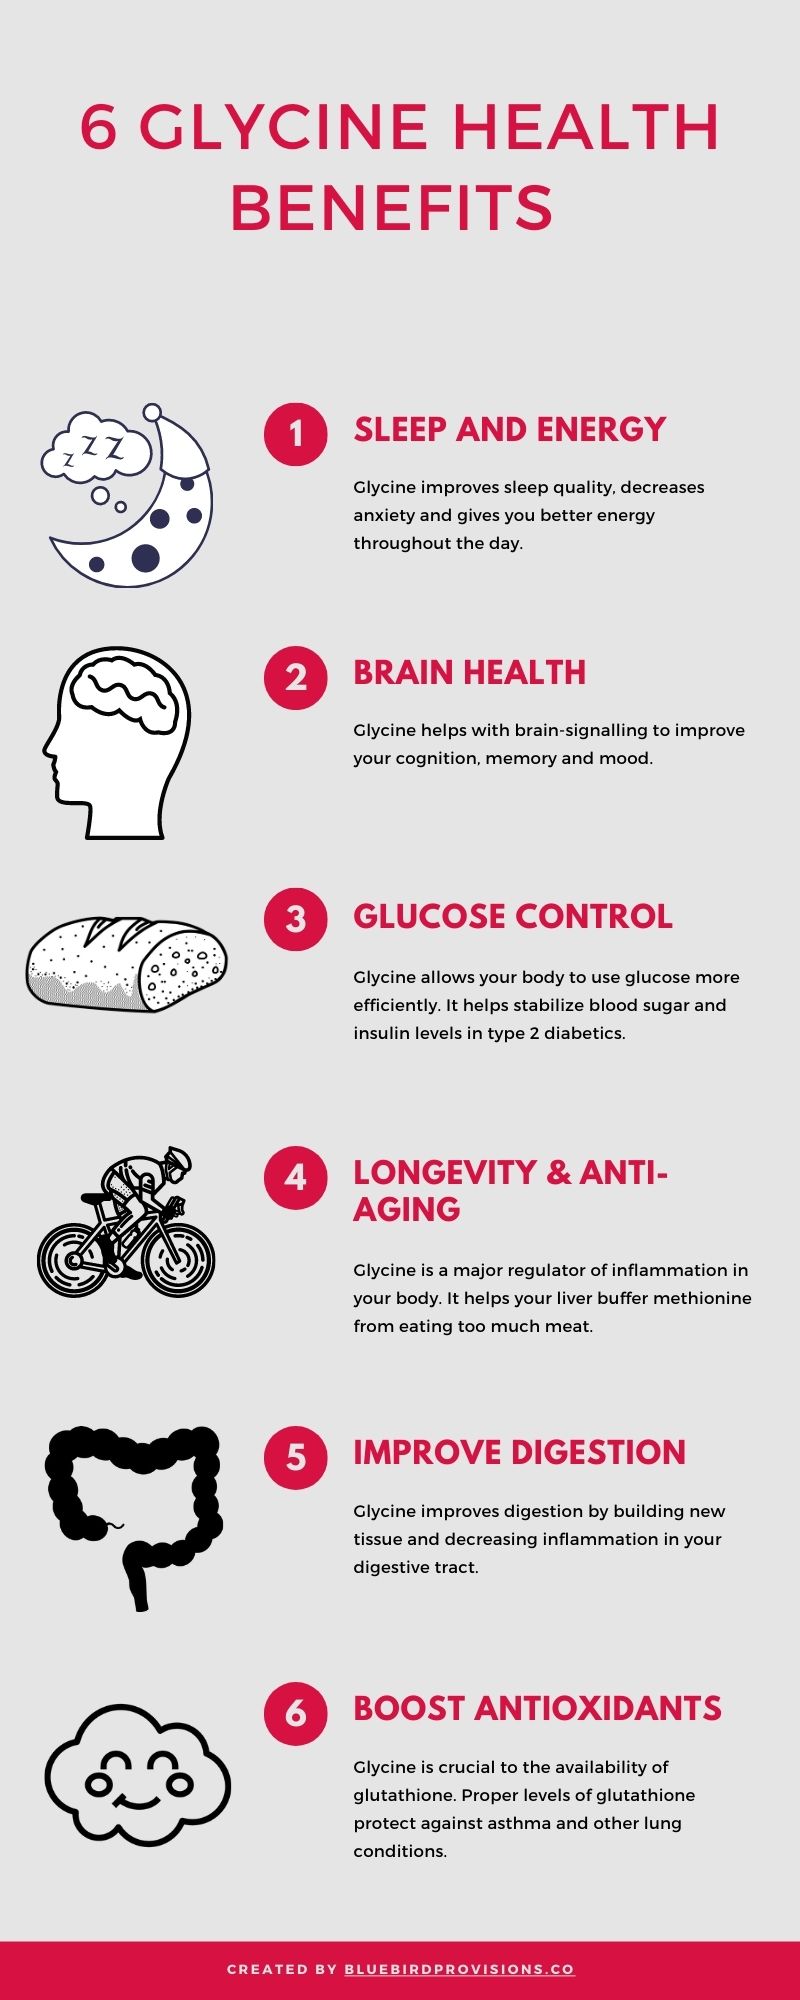 Glycine health benefits infographic